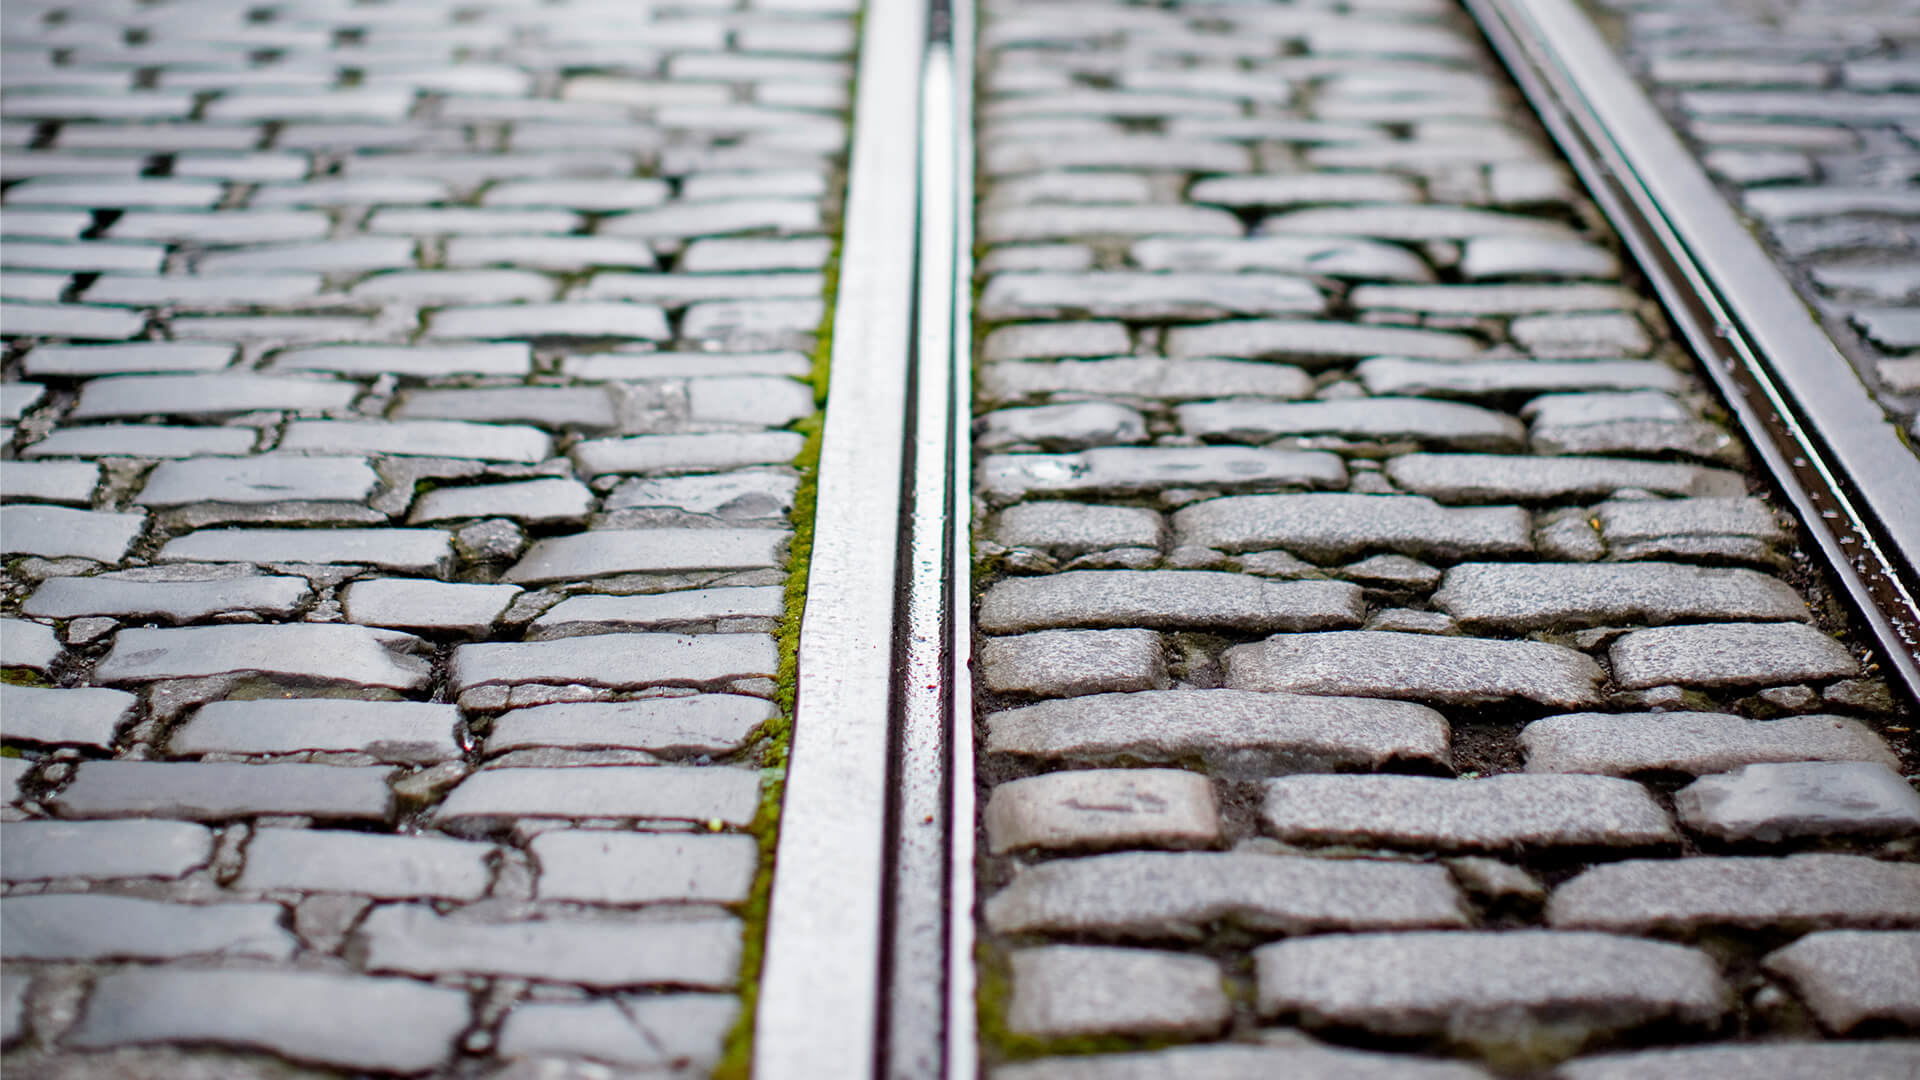 A close-up of metal tram tracks set in cobblestones